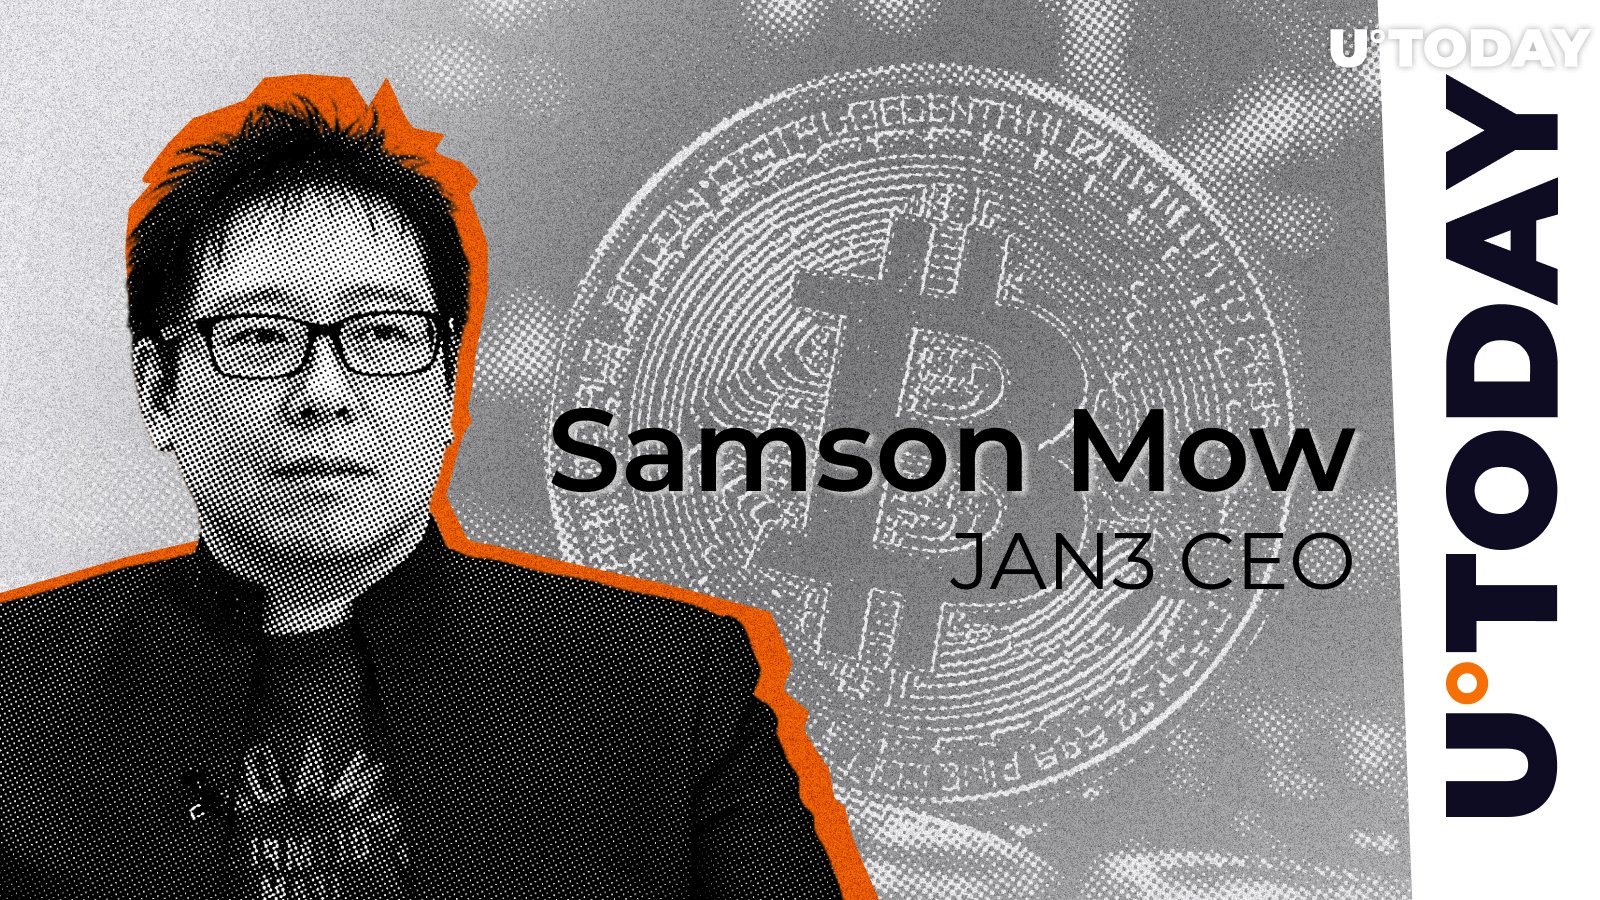 Samson Mow Issues Bullish Bitcoin Call on Goldman Sachs Boss